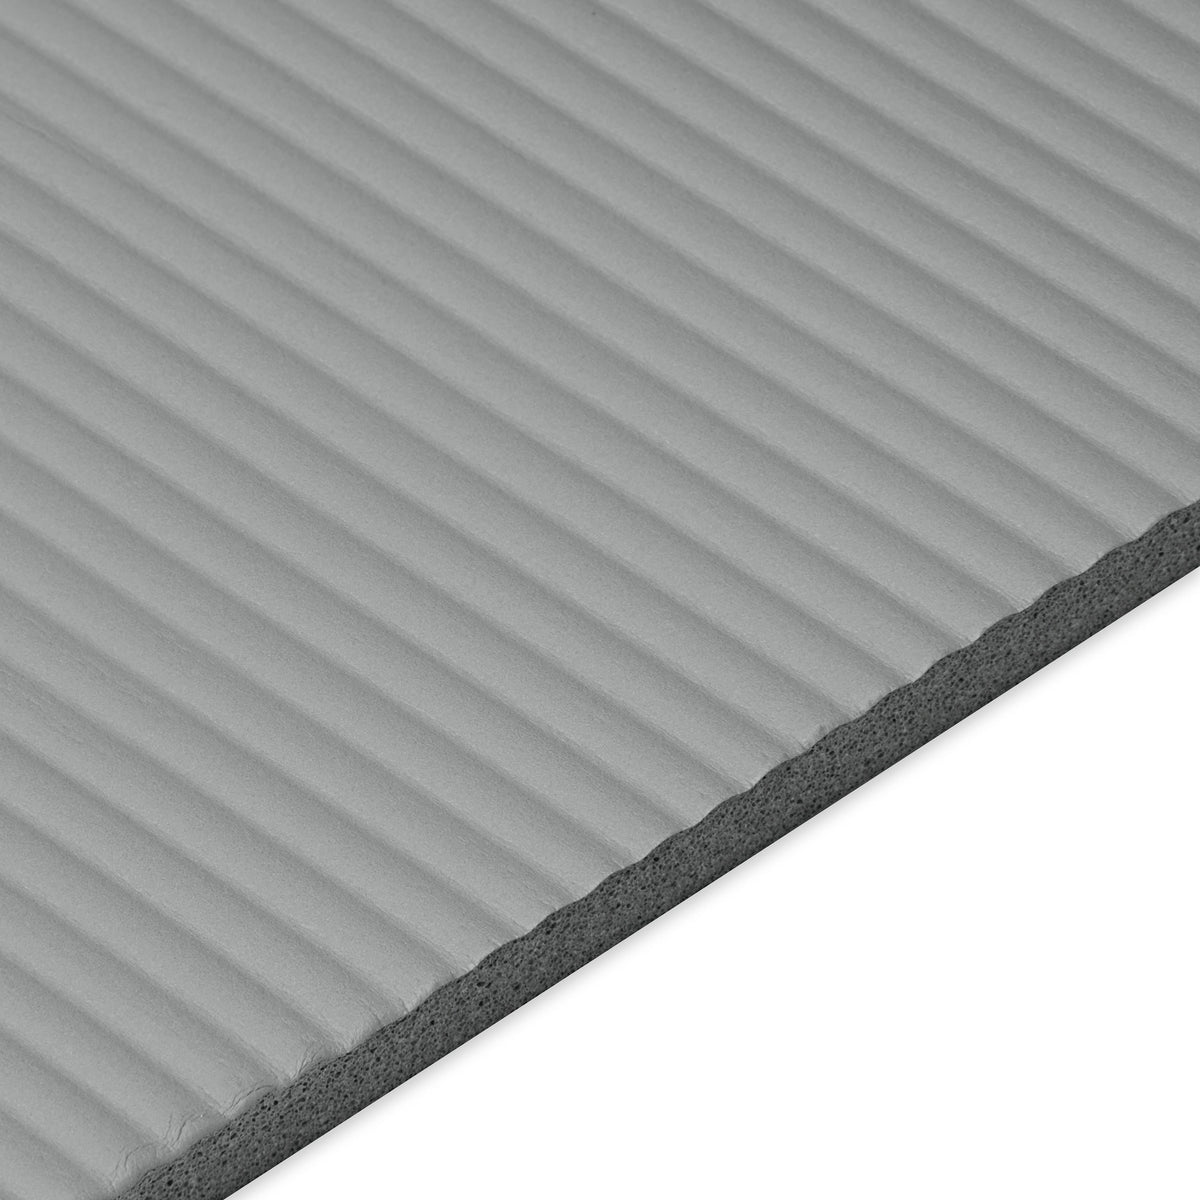 Reebok 10mm Fitness Mat Grey texture closeup